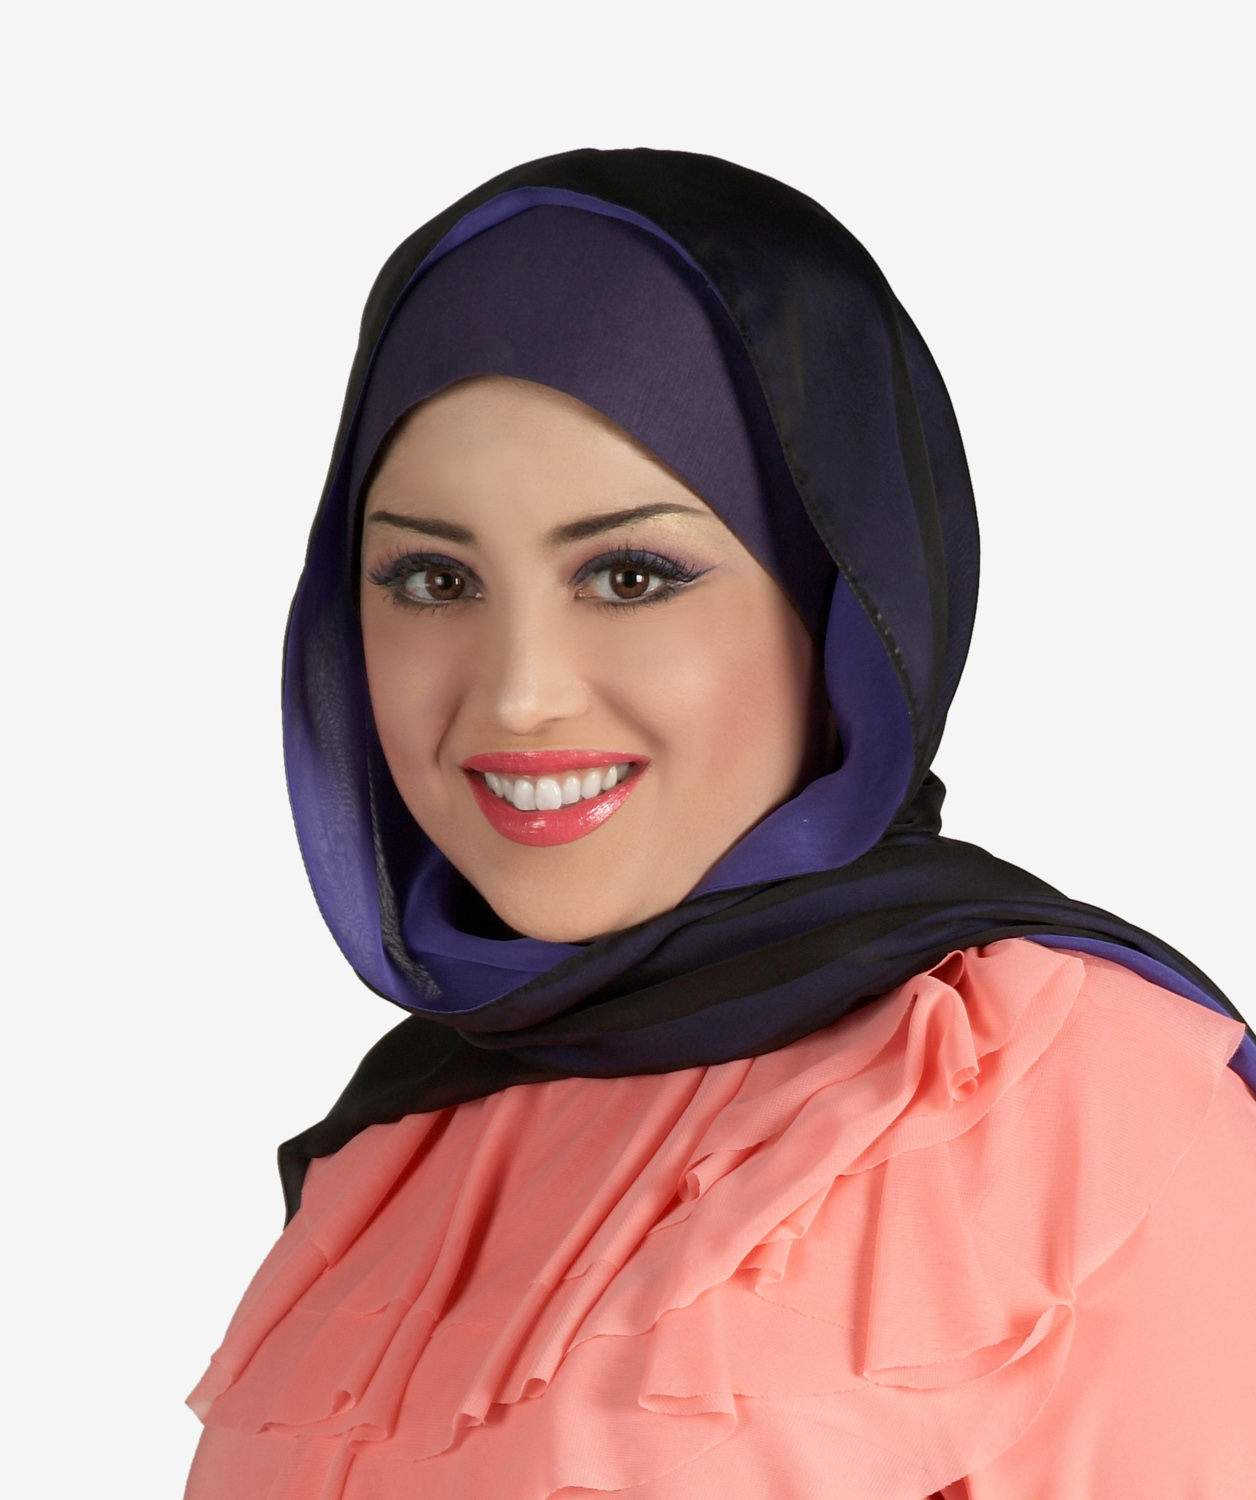 Manar Al-Hashash